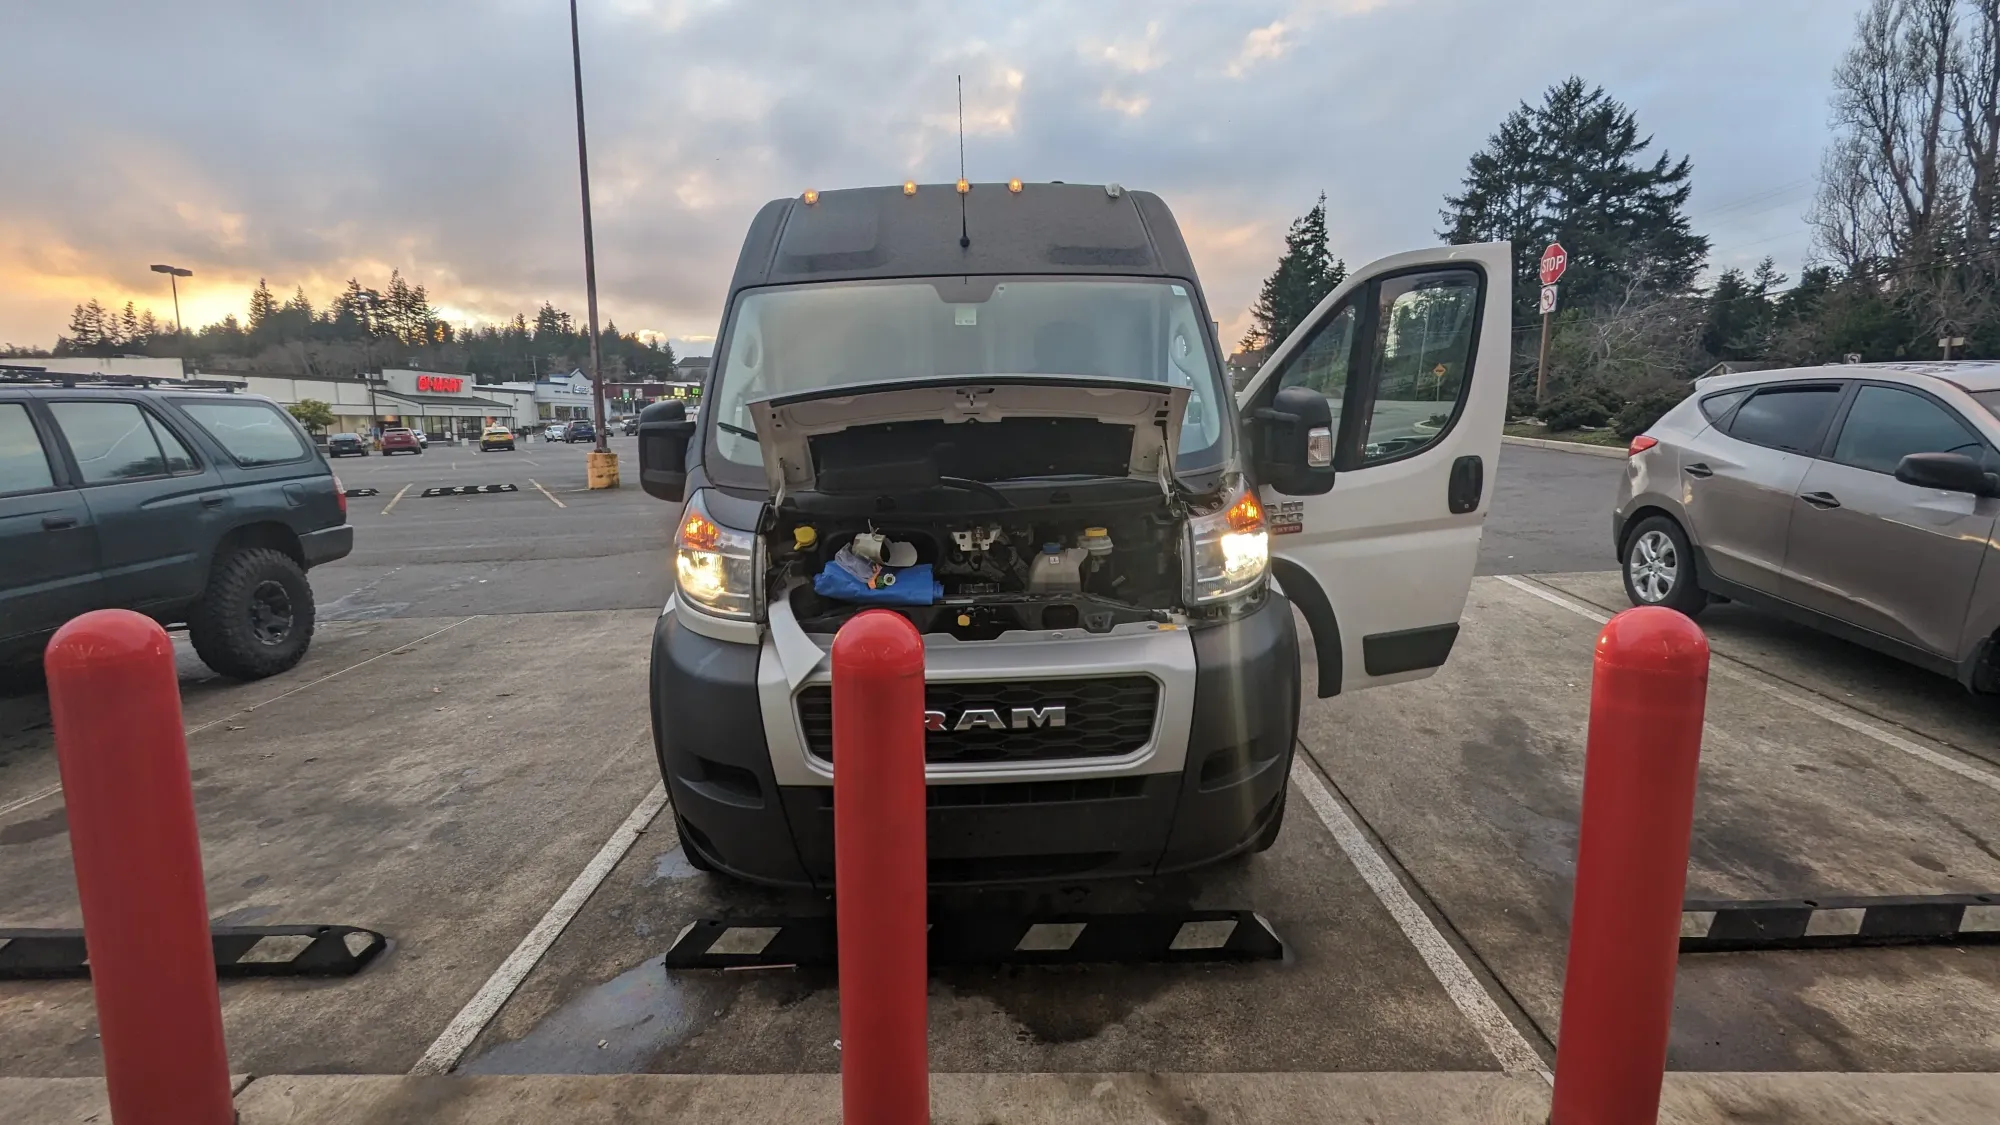 Parking lot van maintenance - replacing headlights